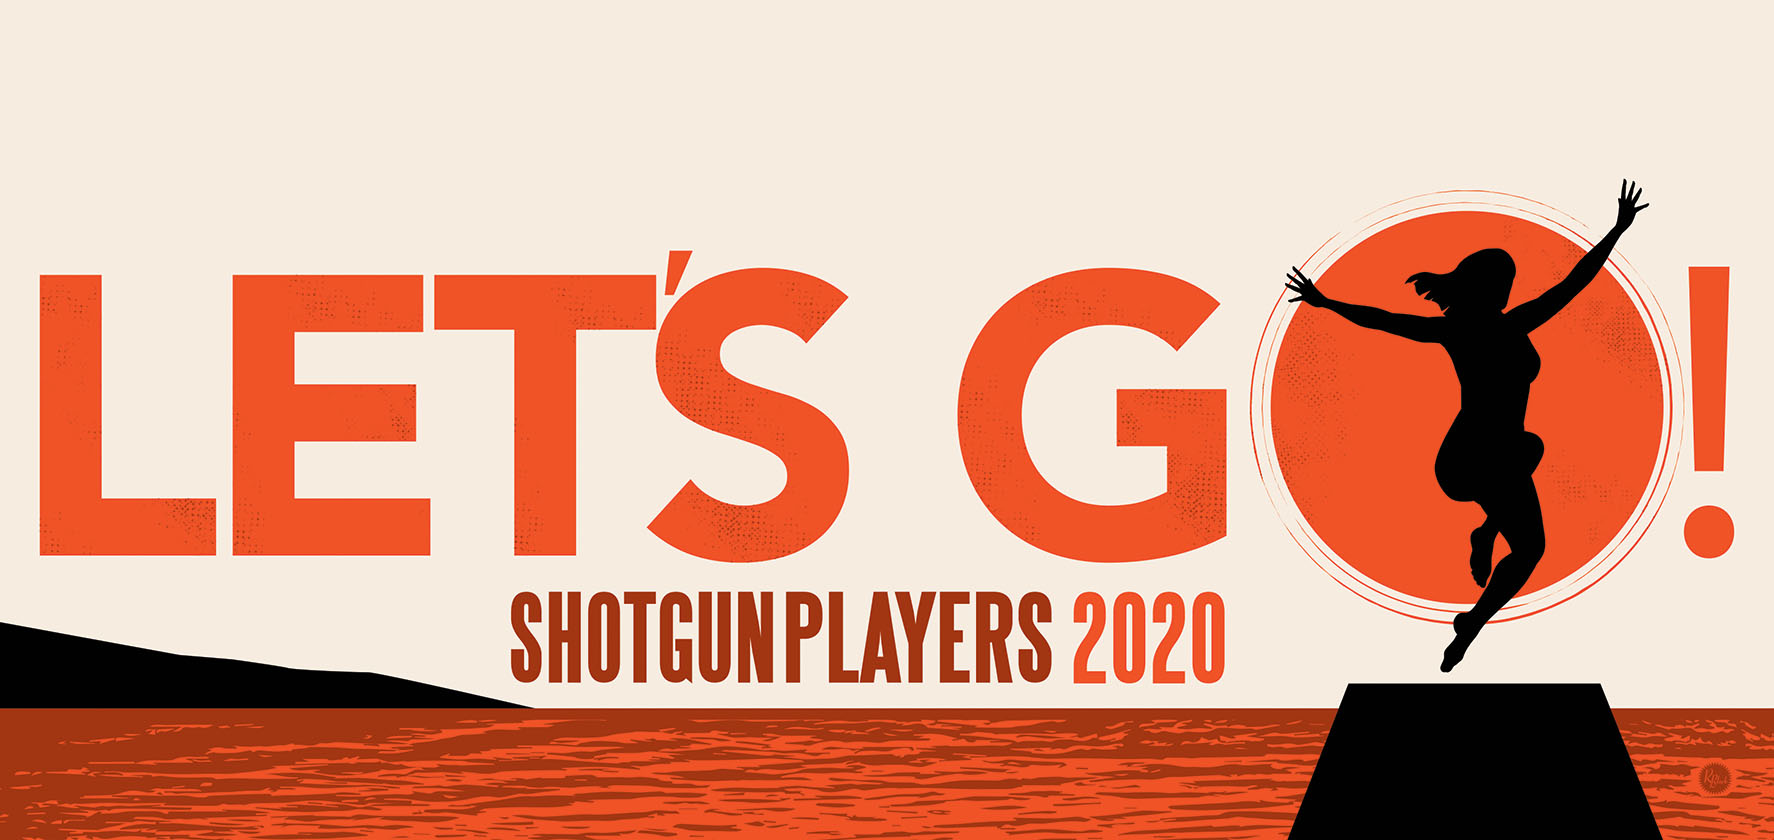 Let's go! Shotgun Players 2020 season.